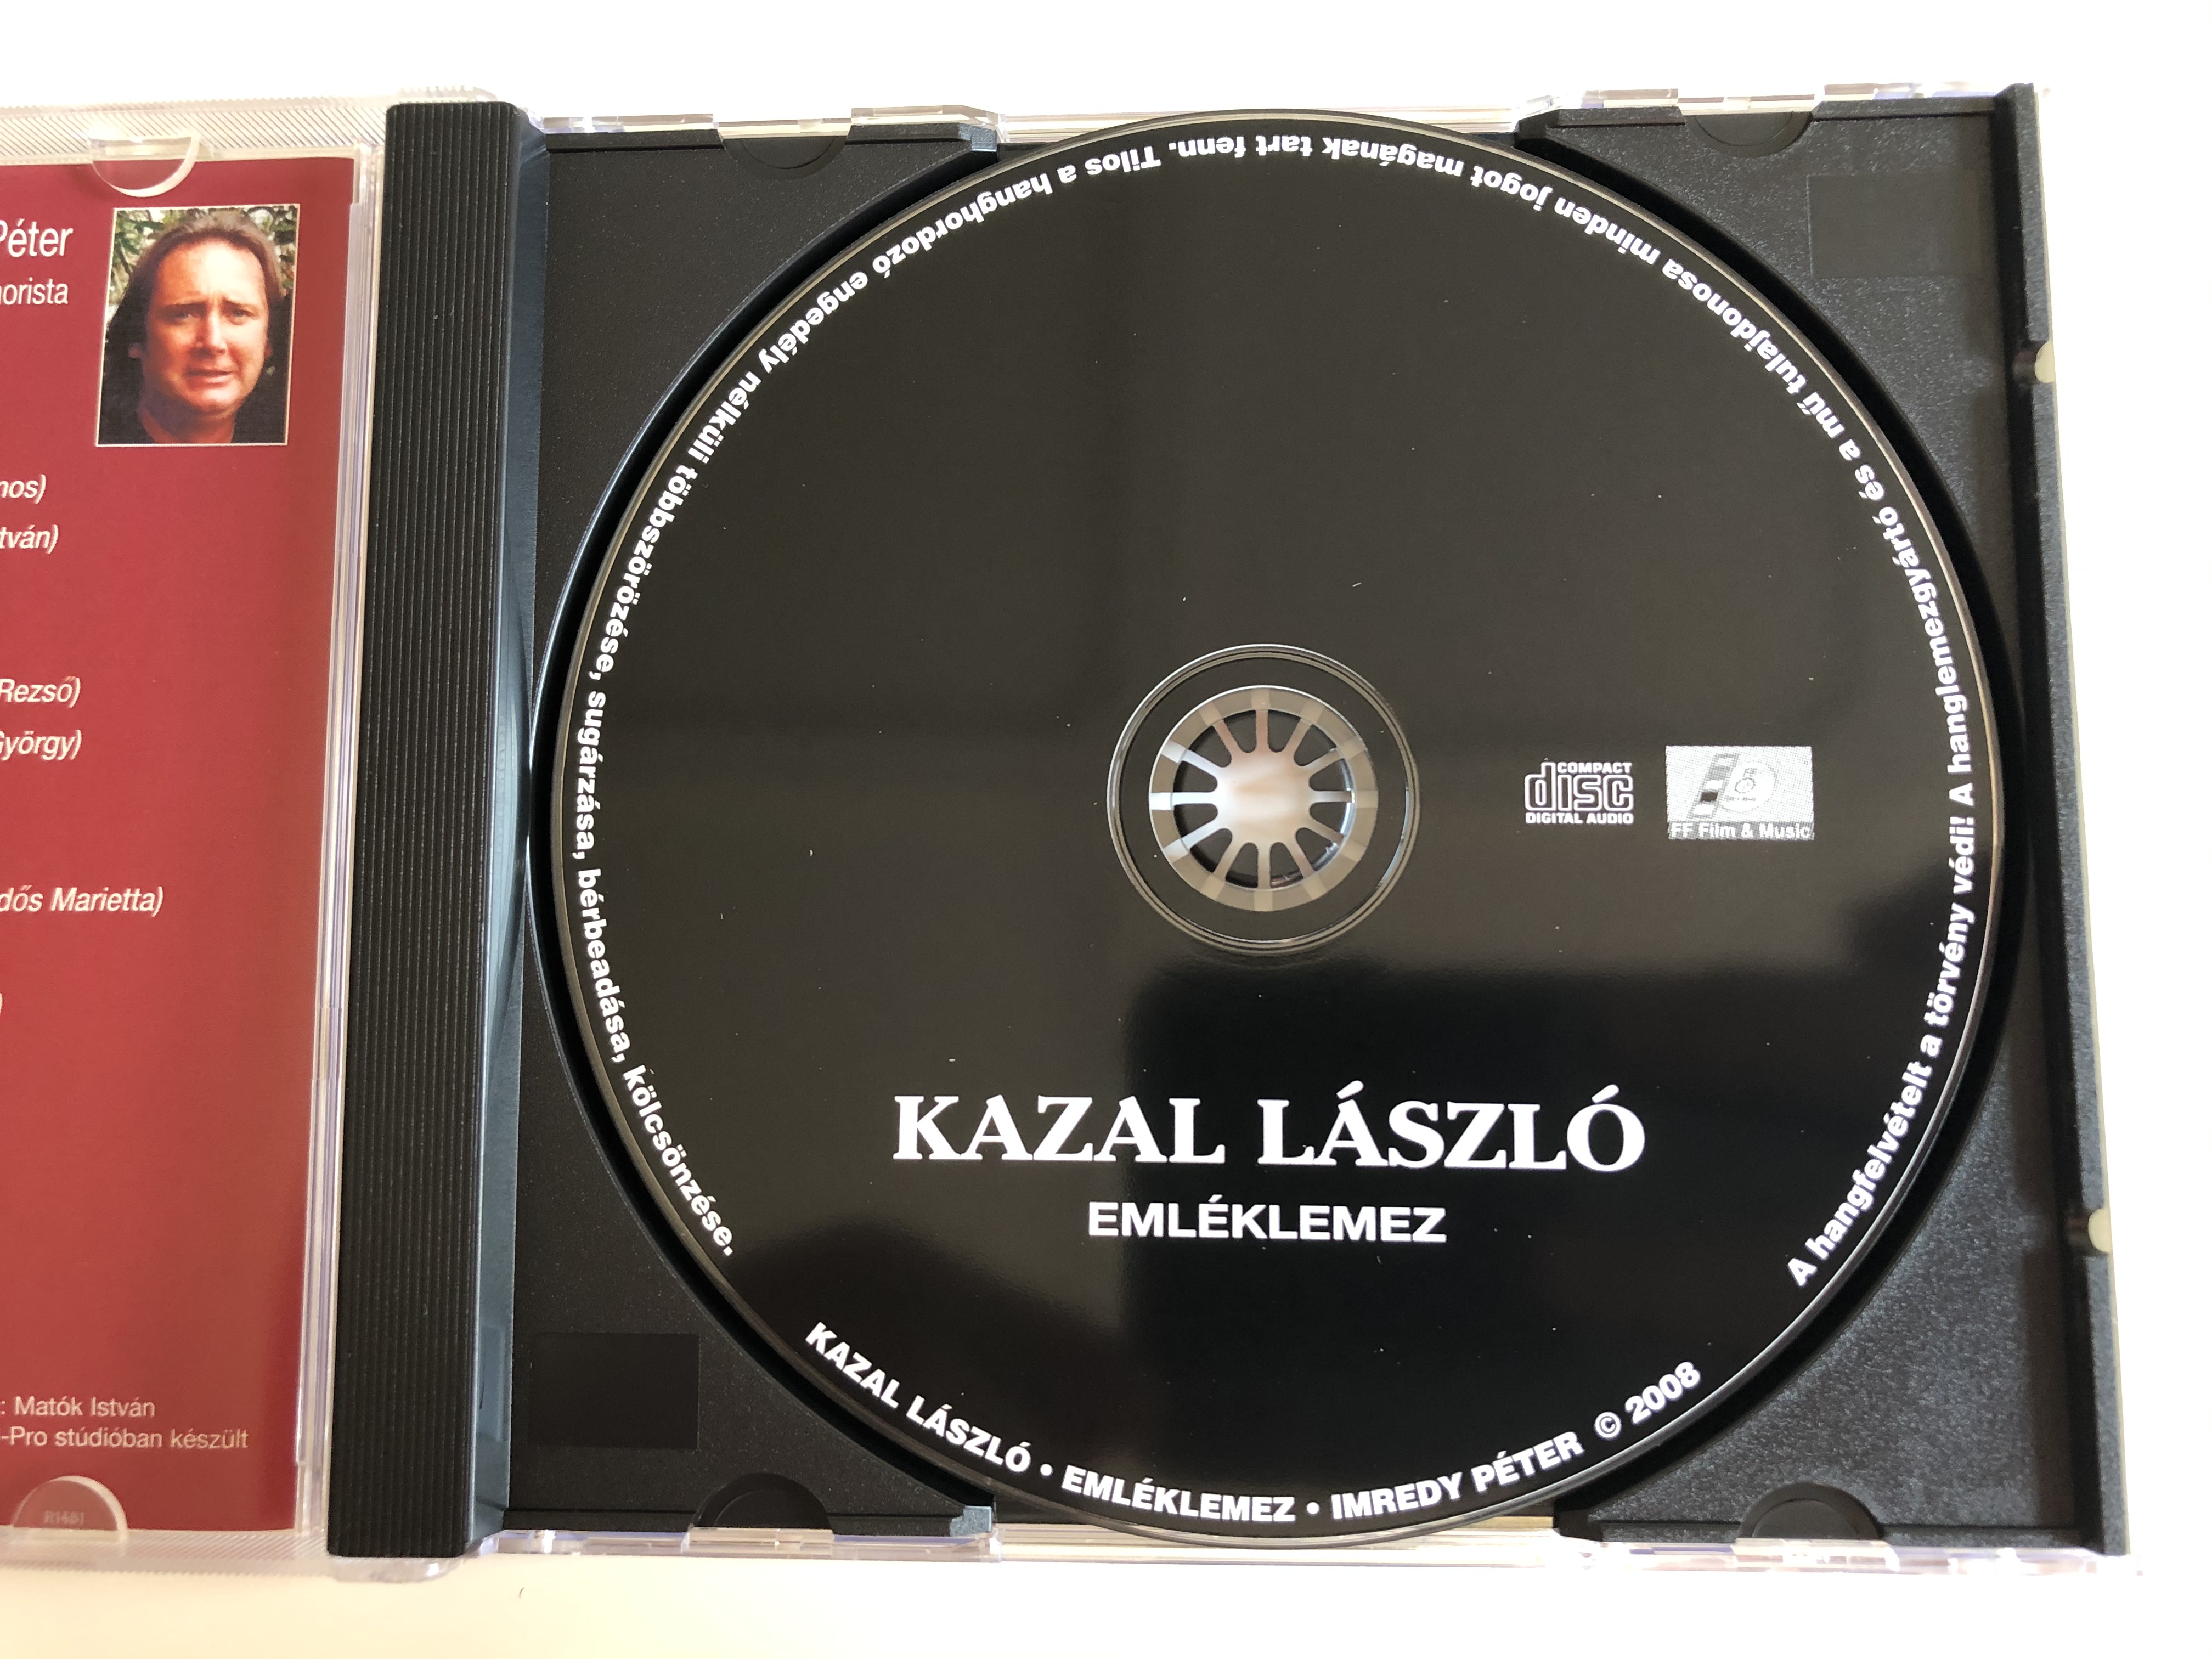 kazal-l-szl-eml-klemez-orokzold-slagerek-kuplek-kazal-laszlo-musorabol-imredy-p-ter-eloadasaban-ff-film-music-audio-cd-2008-b687892-3-.jpg